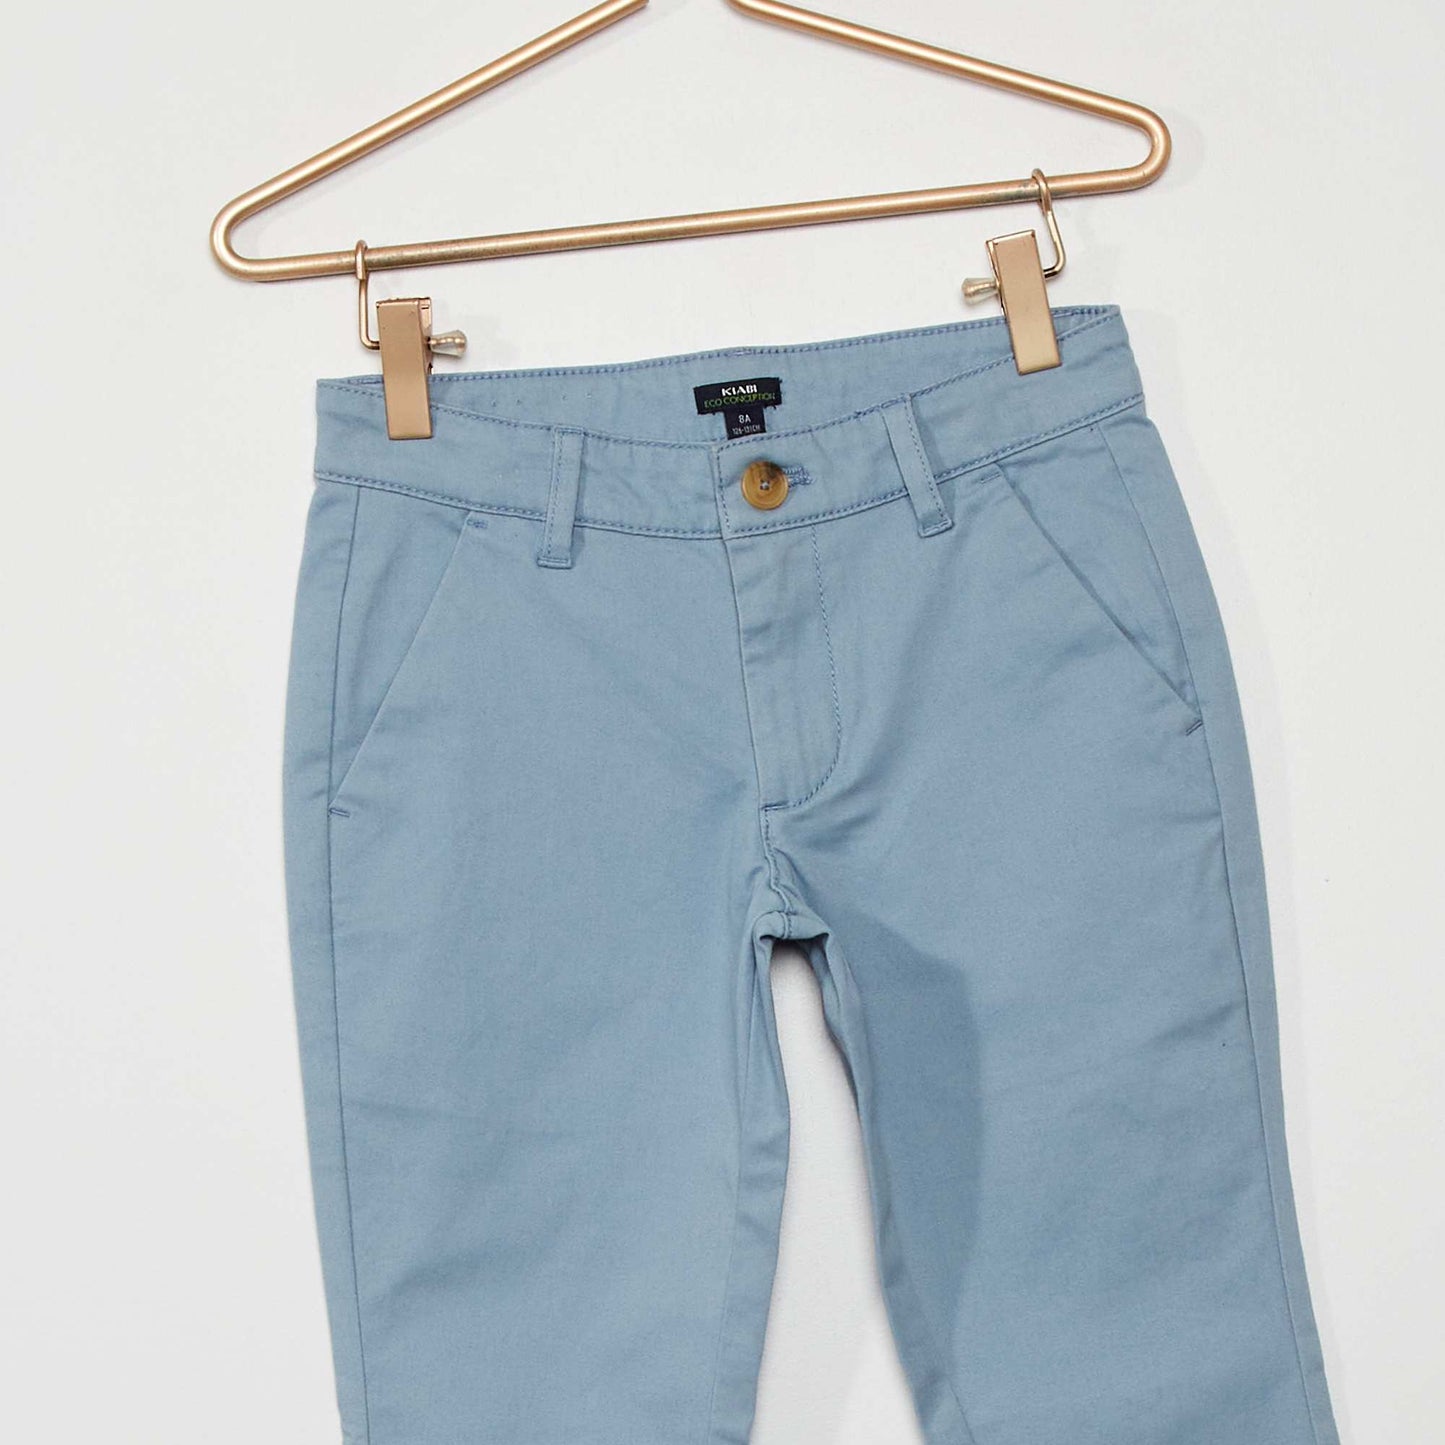 Pantalon chino azul denim